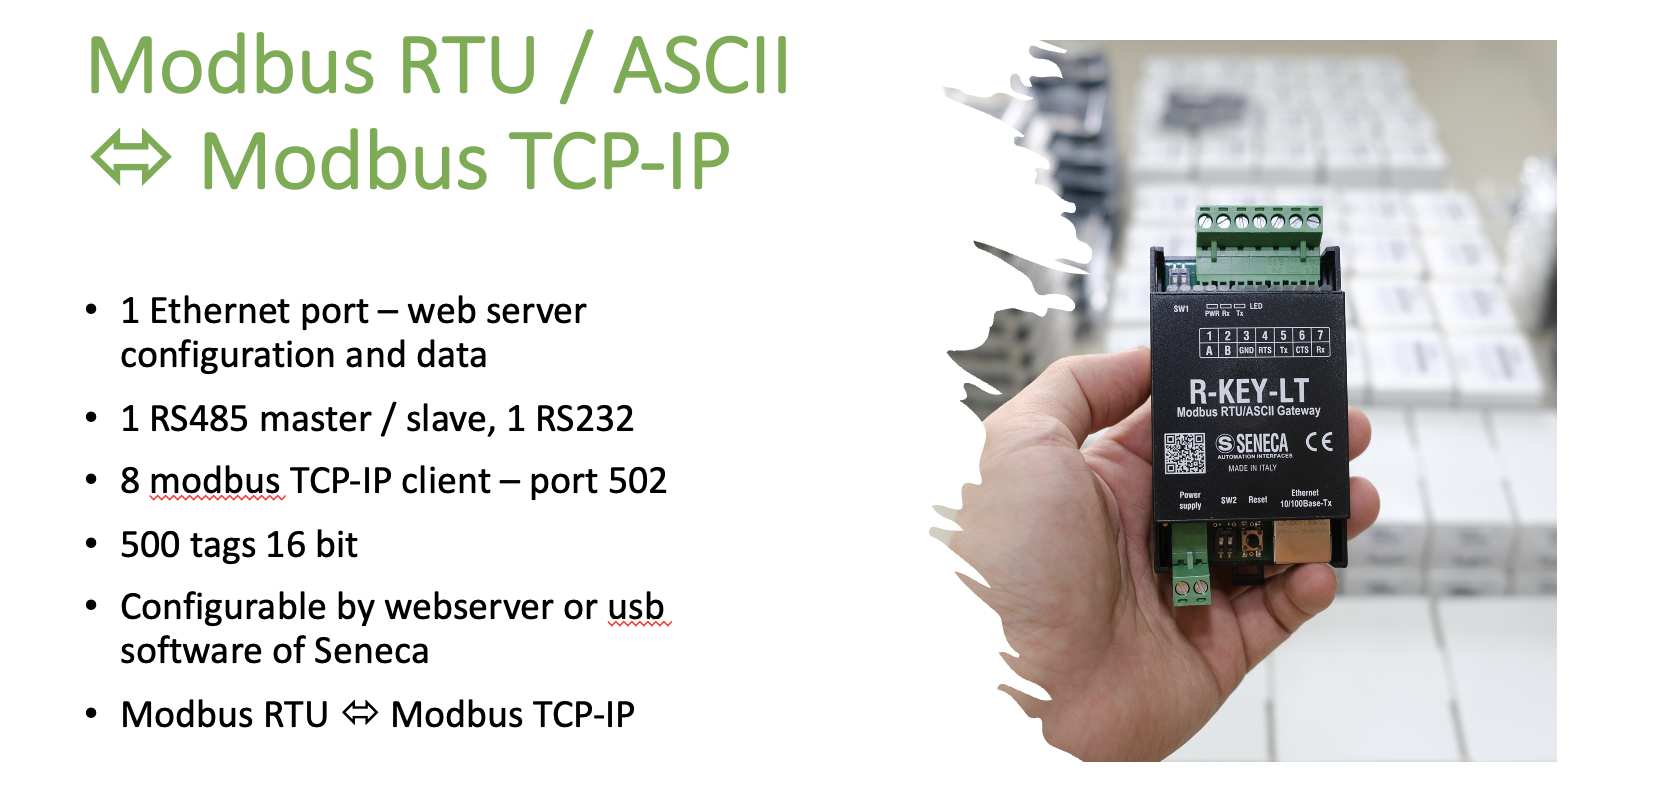 Bộ chuyển đổi Modbus RTU <=> Modbus TCP-IP